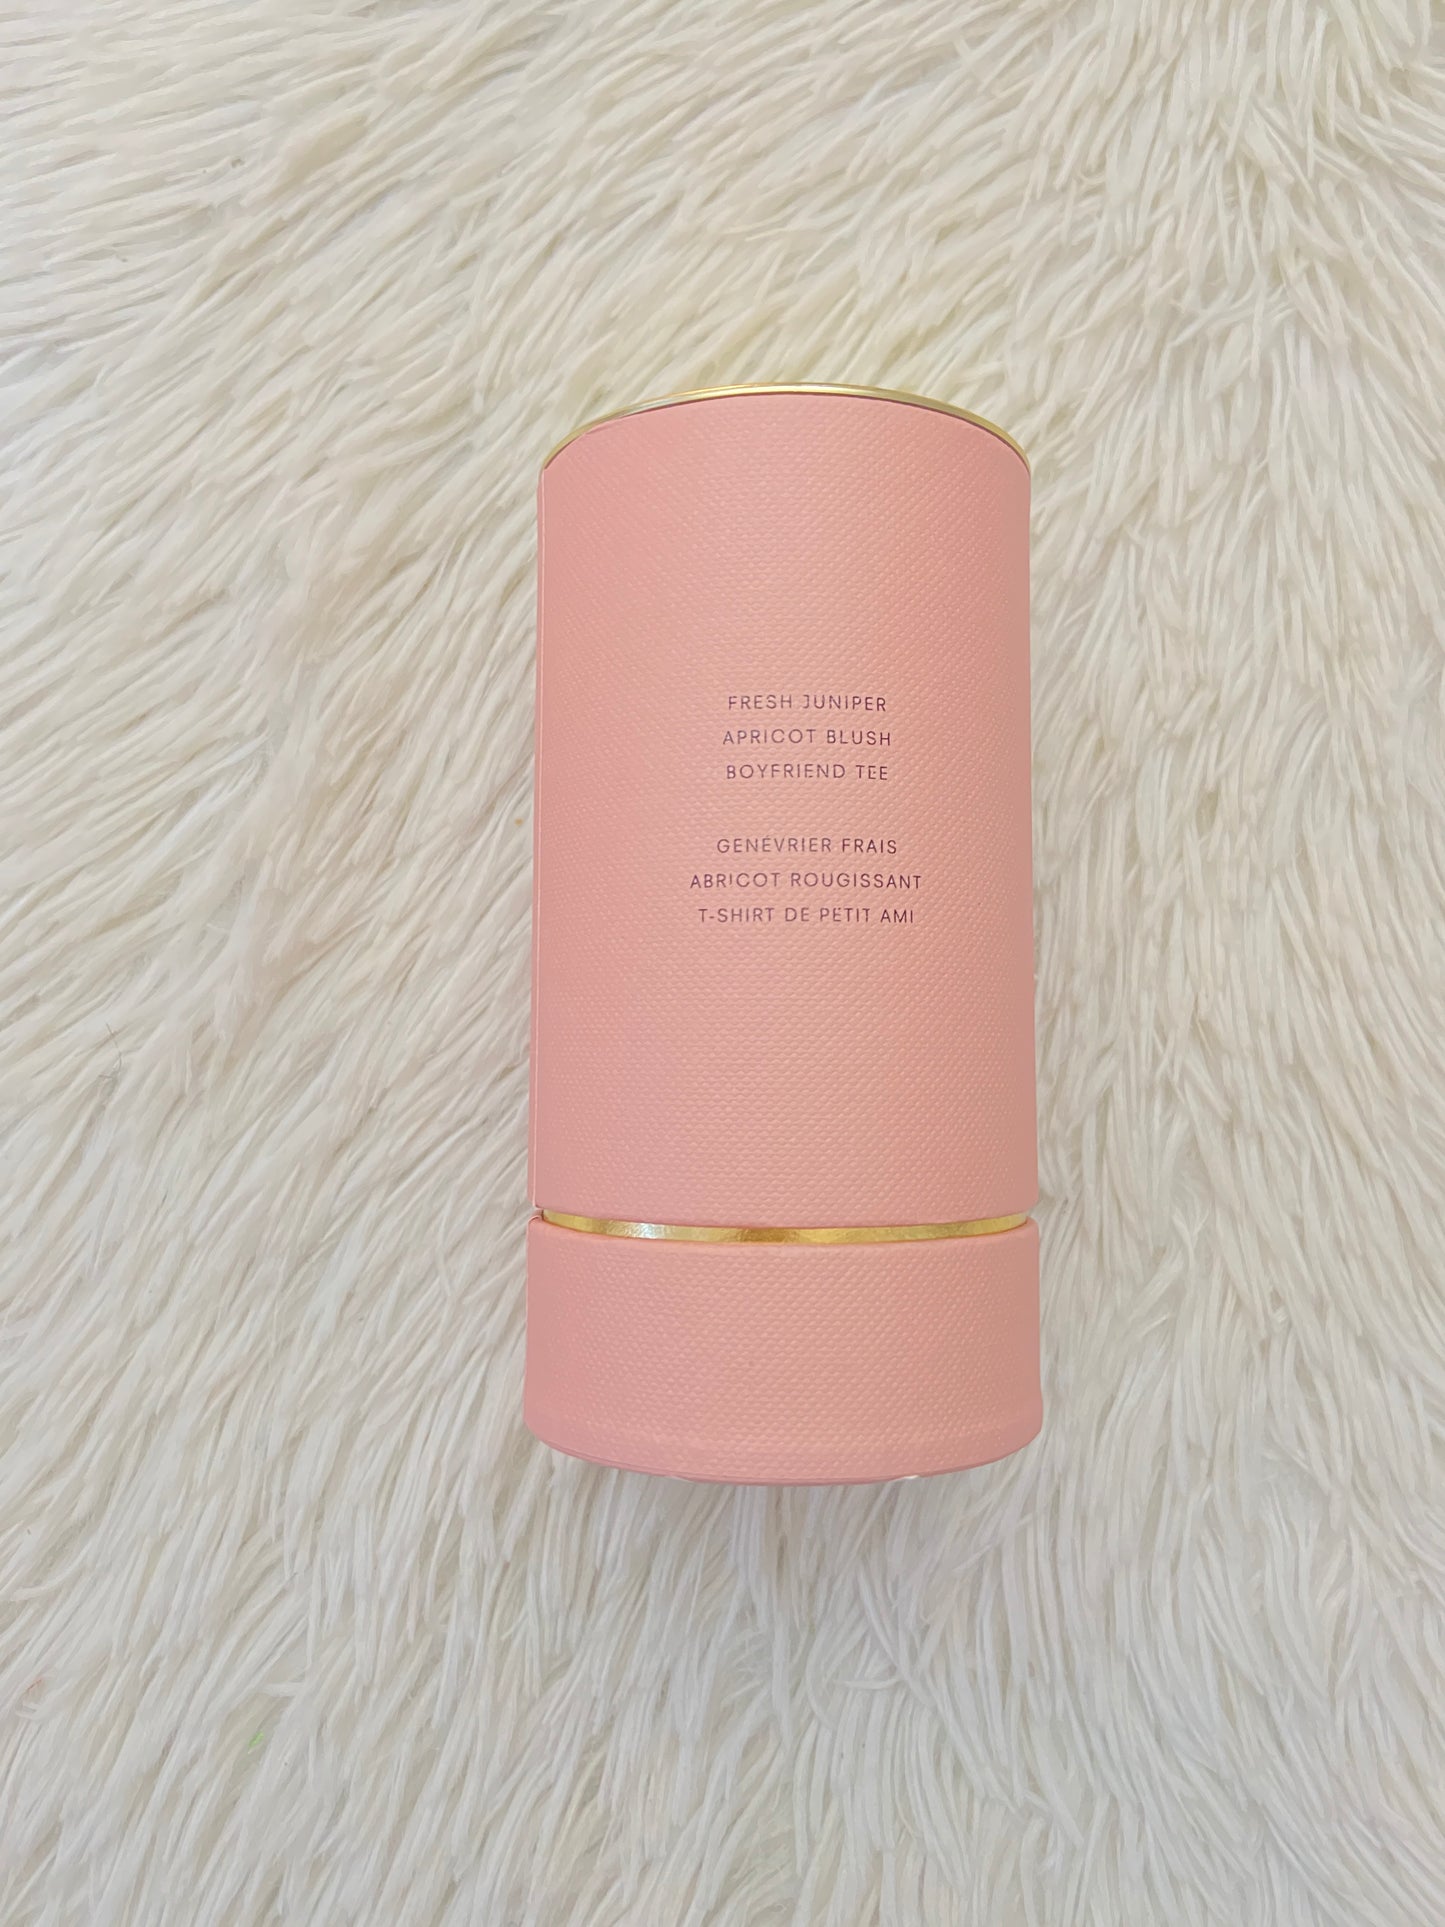 Perfume Victoria’s Secret original rosado claro, LOVE.